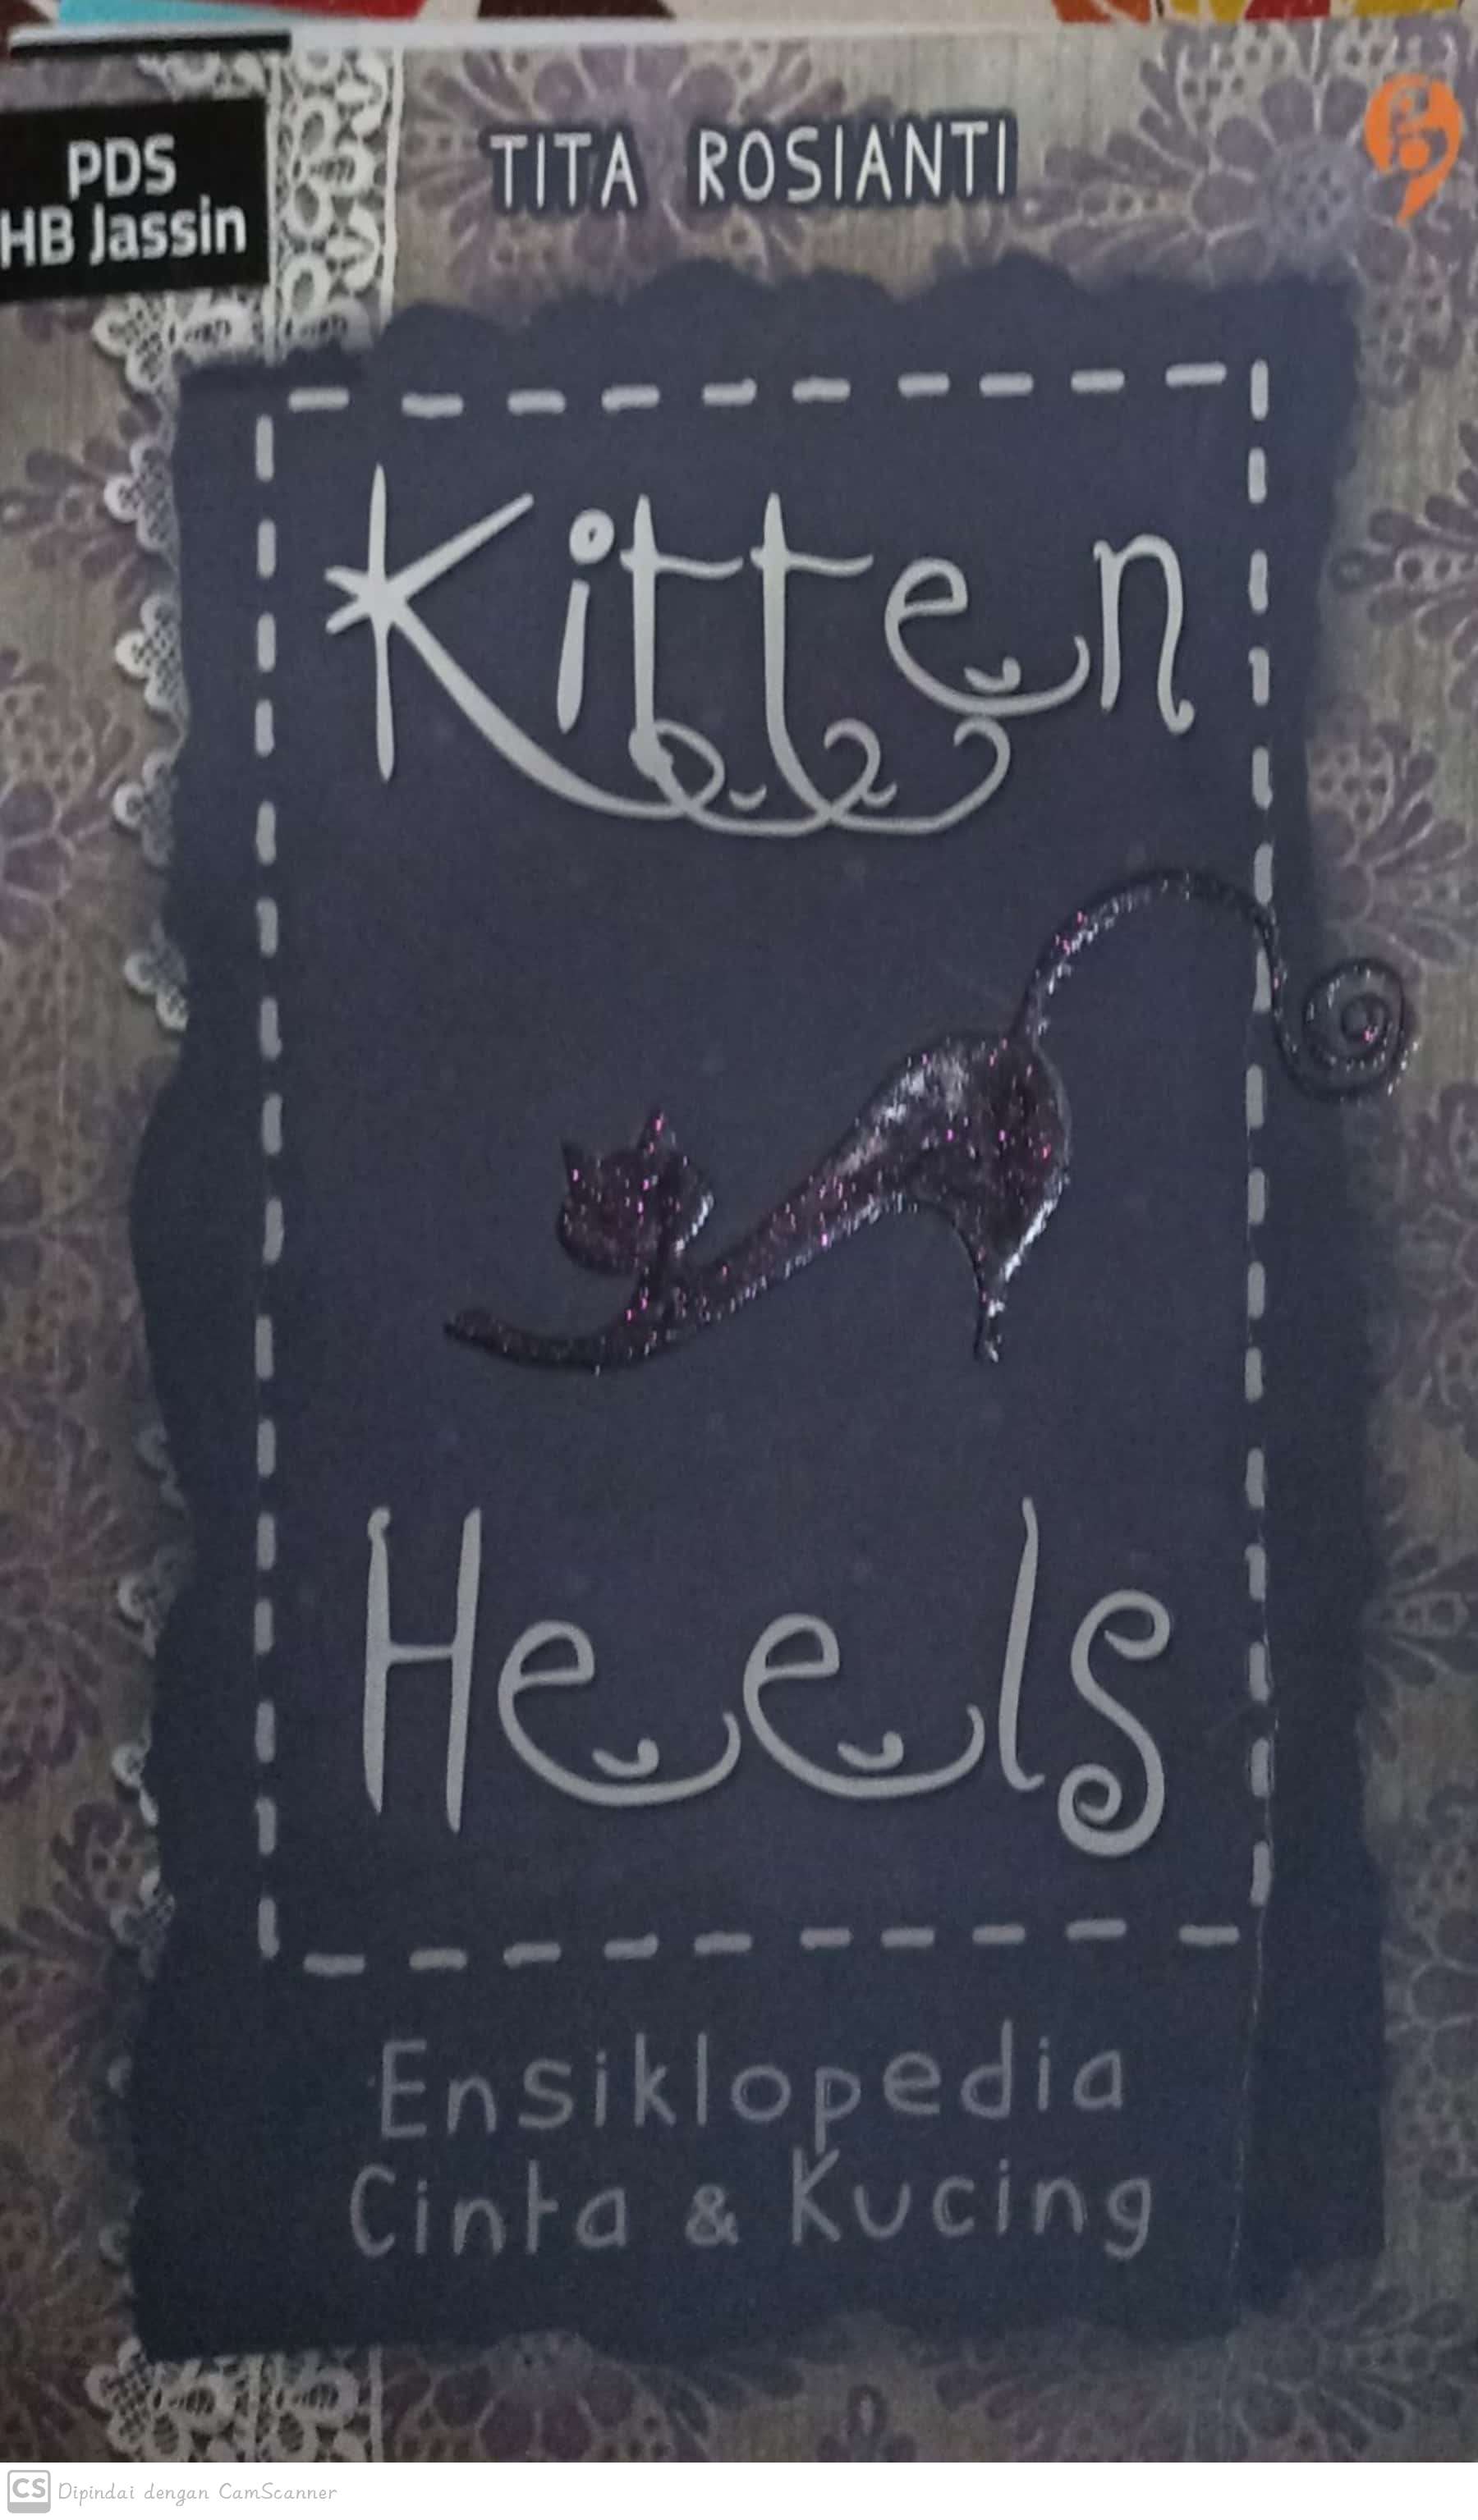 Kitten heels :  ensiklopedia cinta & kucing